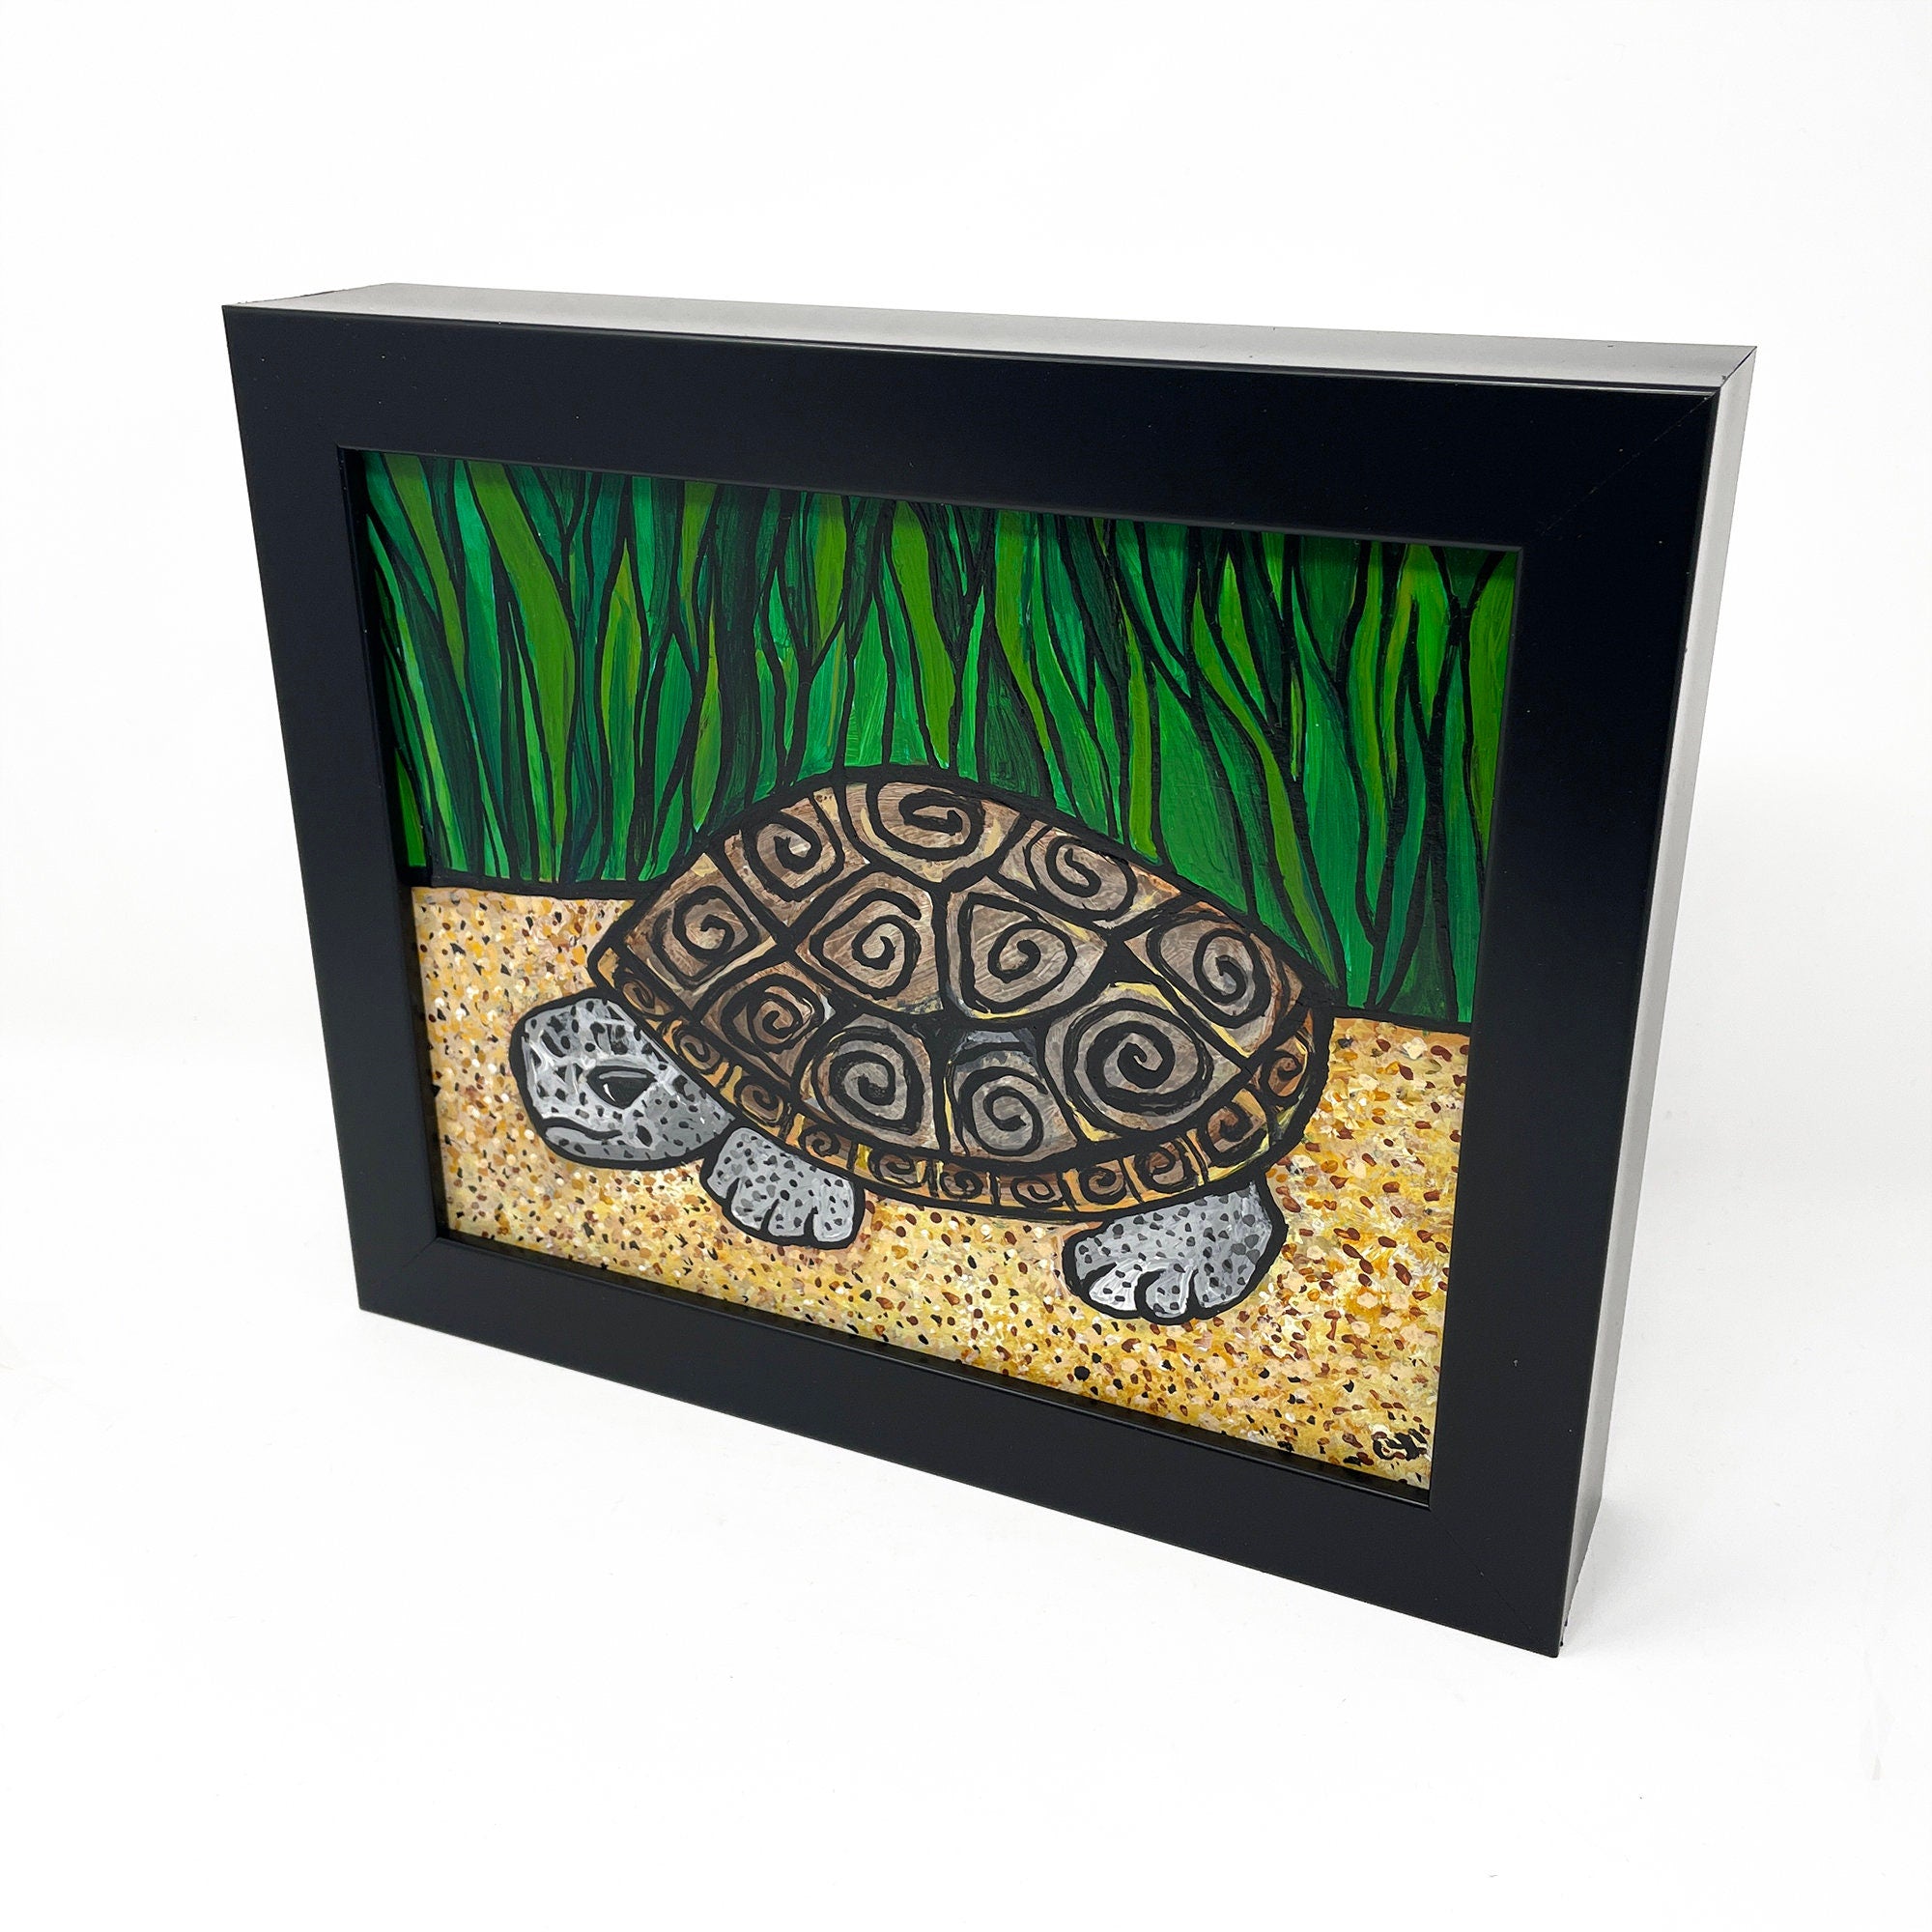 Diamondback Terrapin Painting - Original Terrapin Art - Turtle - Coastal Marsh Land Wetland Animal - Chesapeake Bay - Maryland Virginia